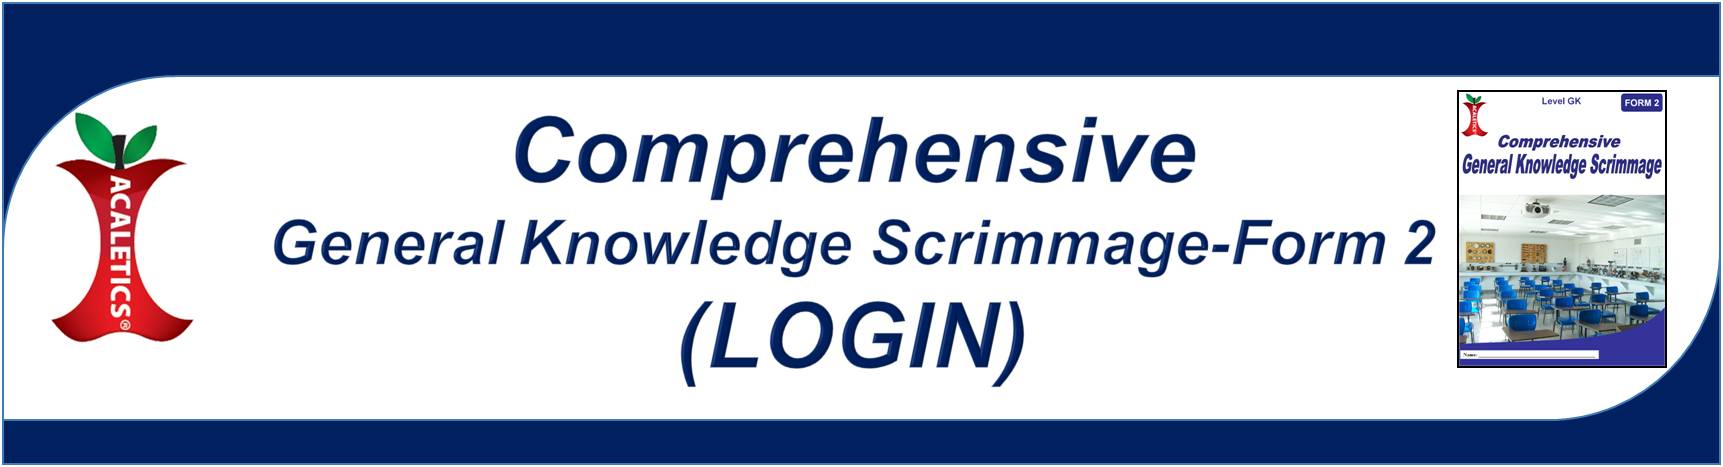 Comprehensive General Knowledge Scrimmage - Form 2